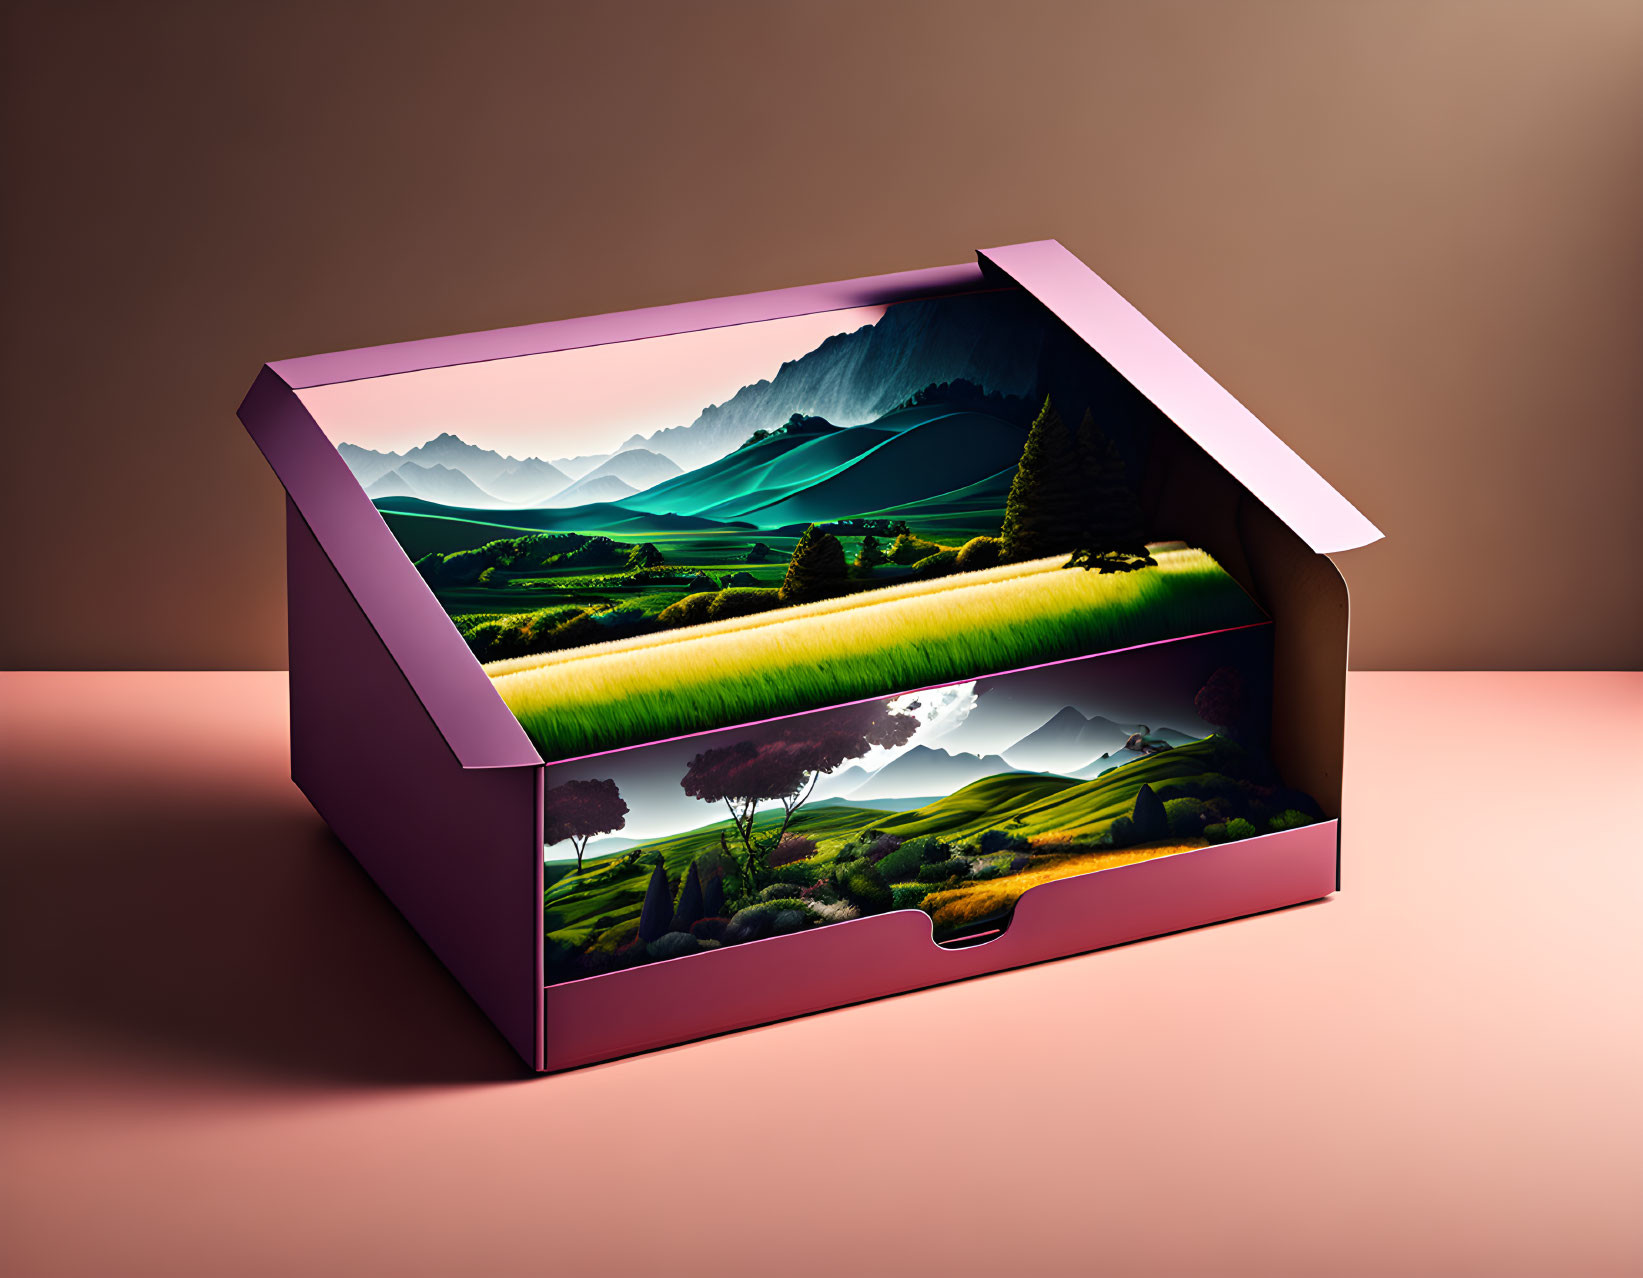 Landscape in a box